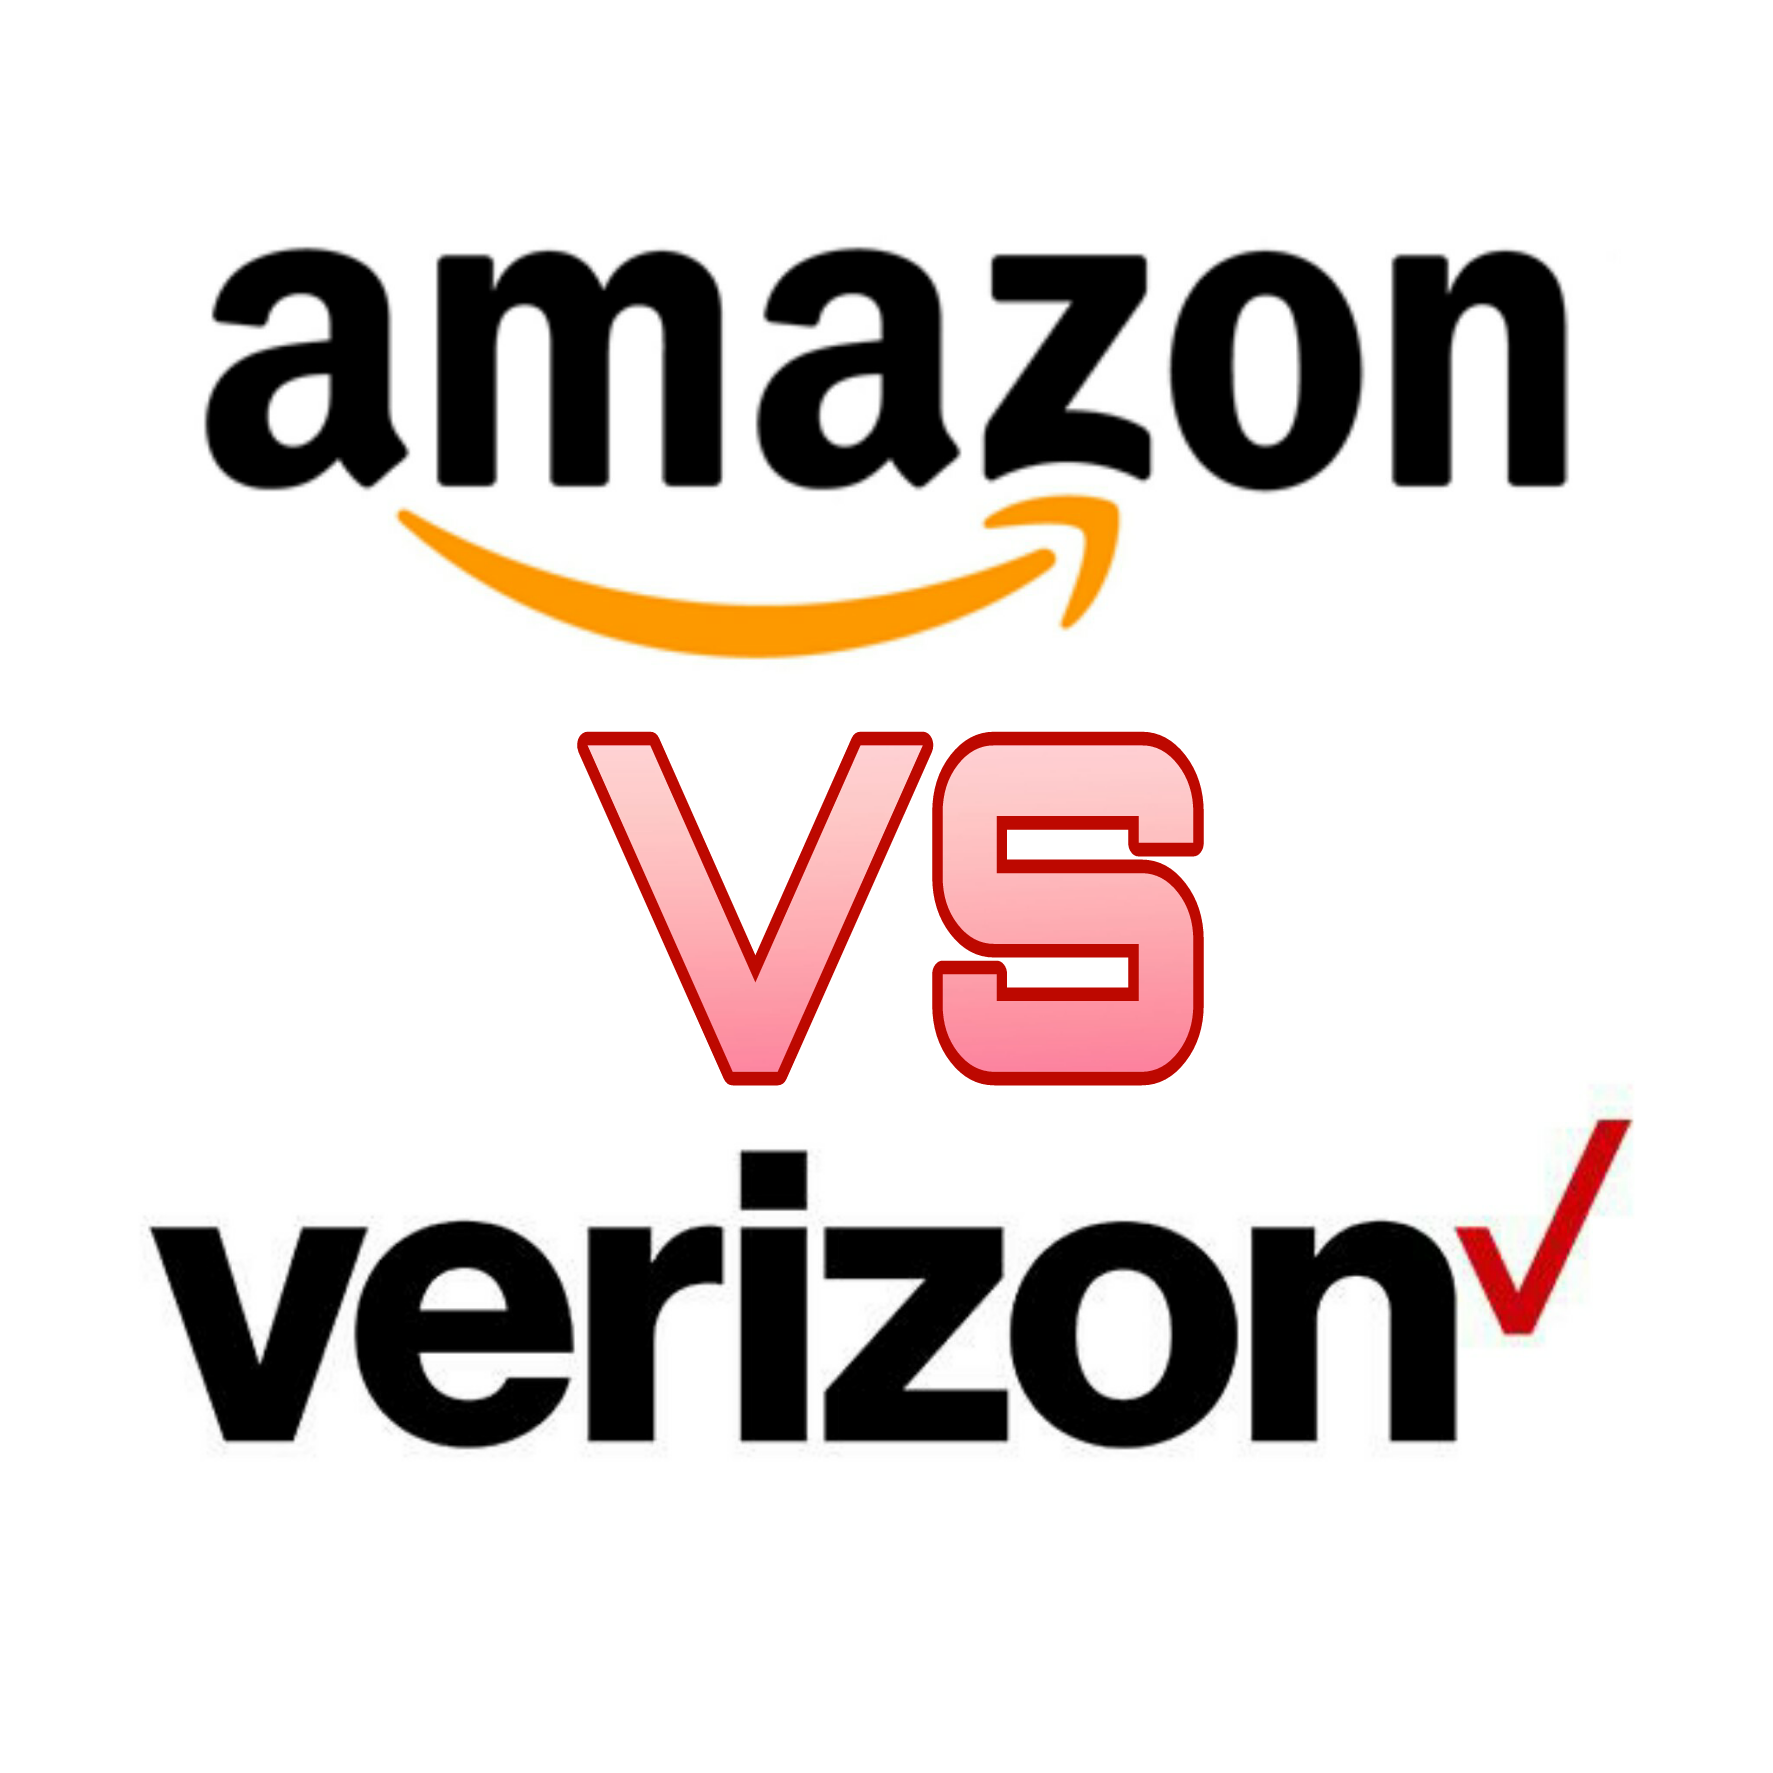 Amazon and Verizon game streaming